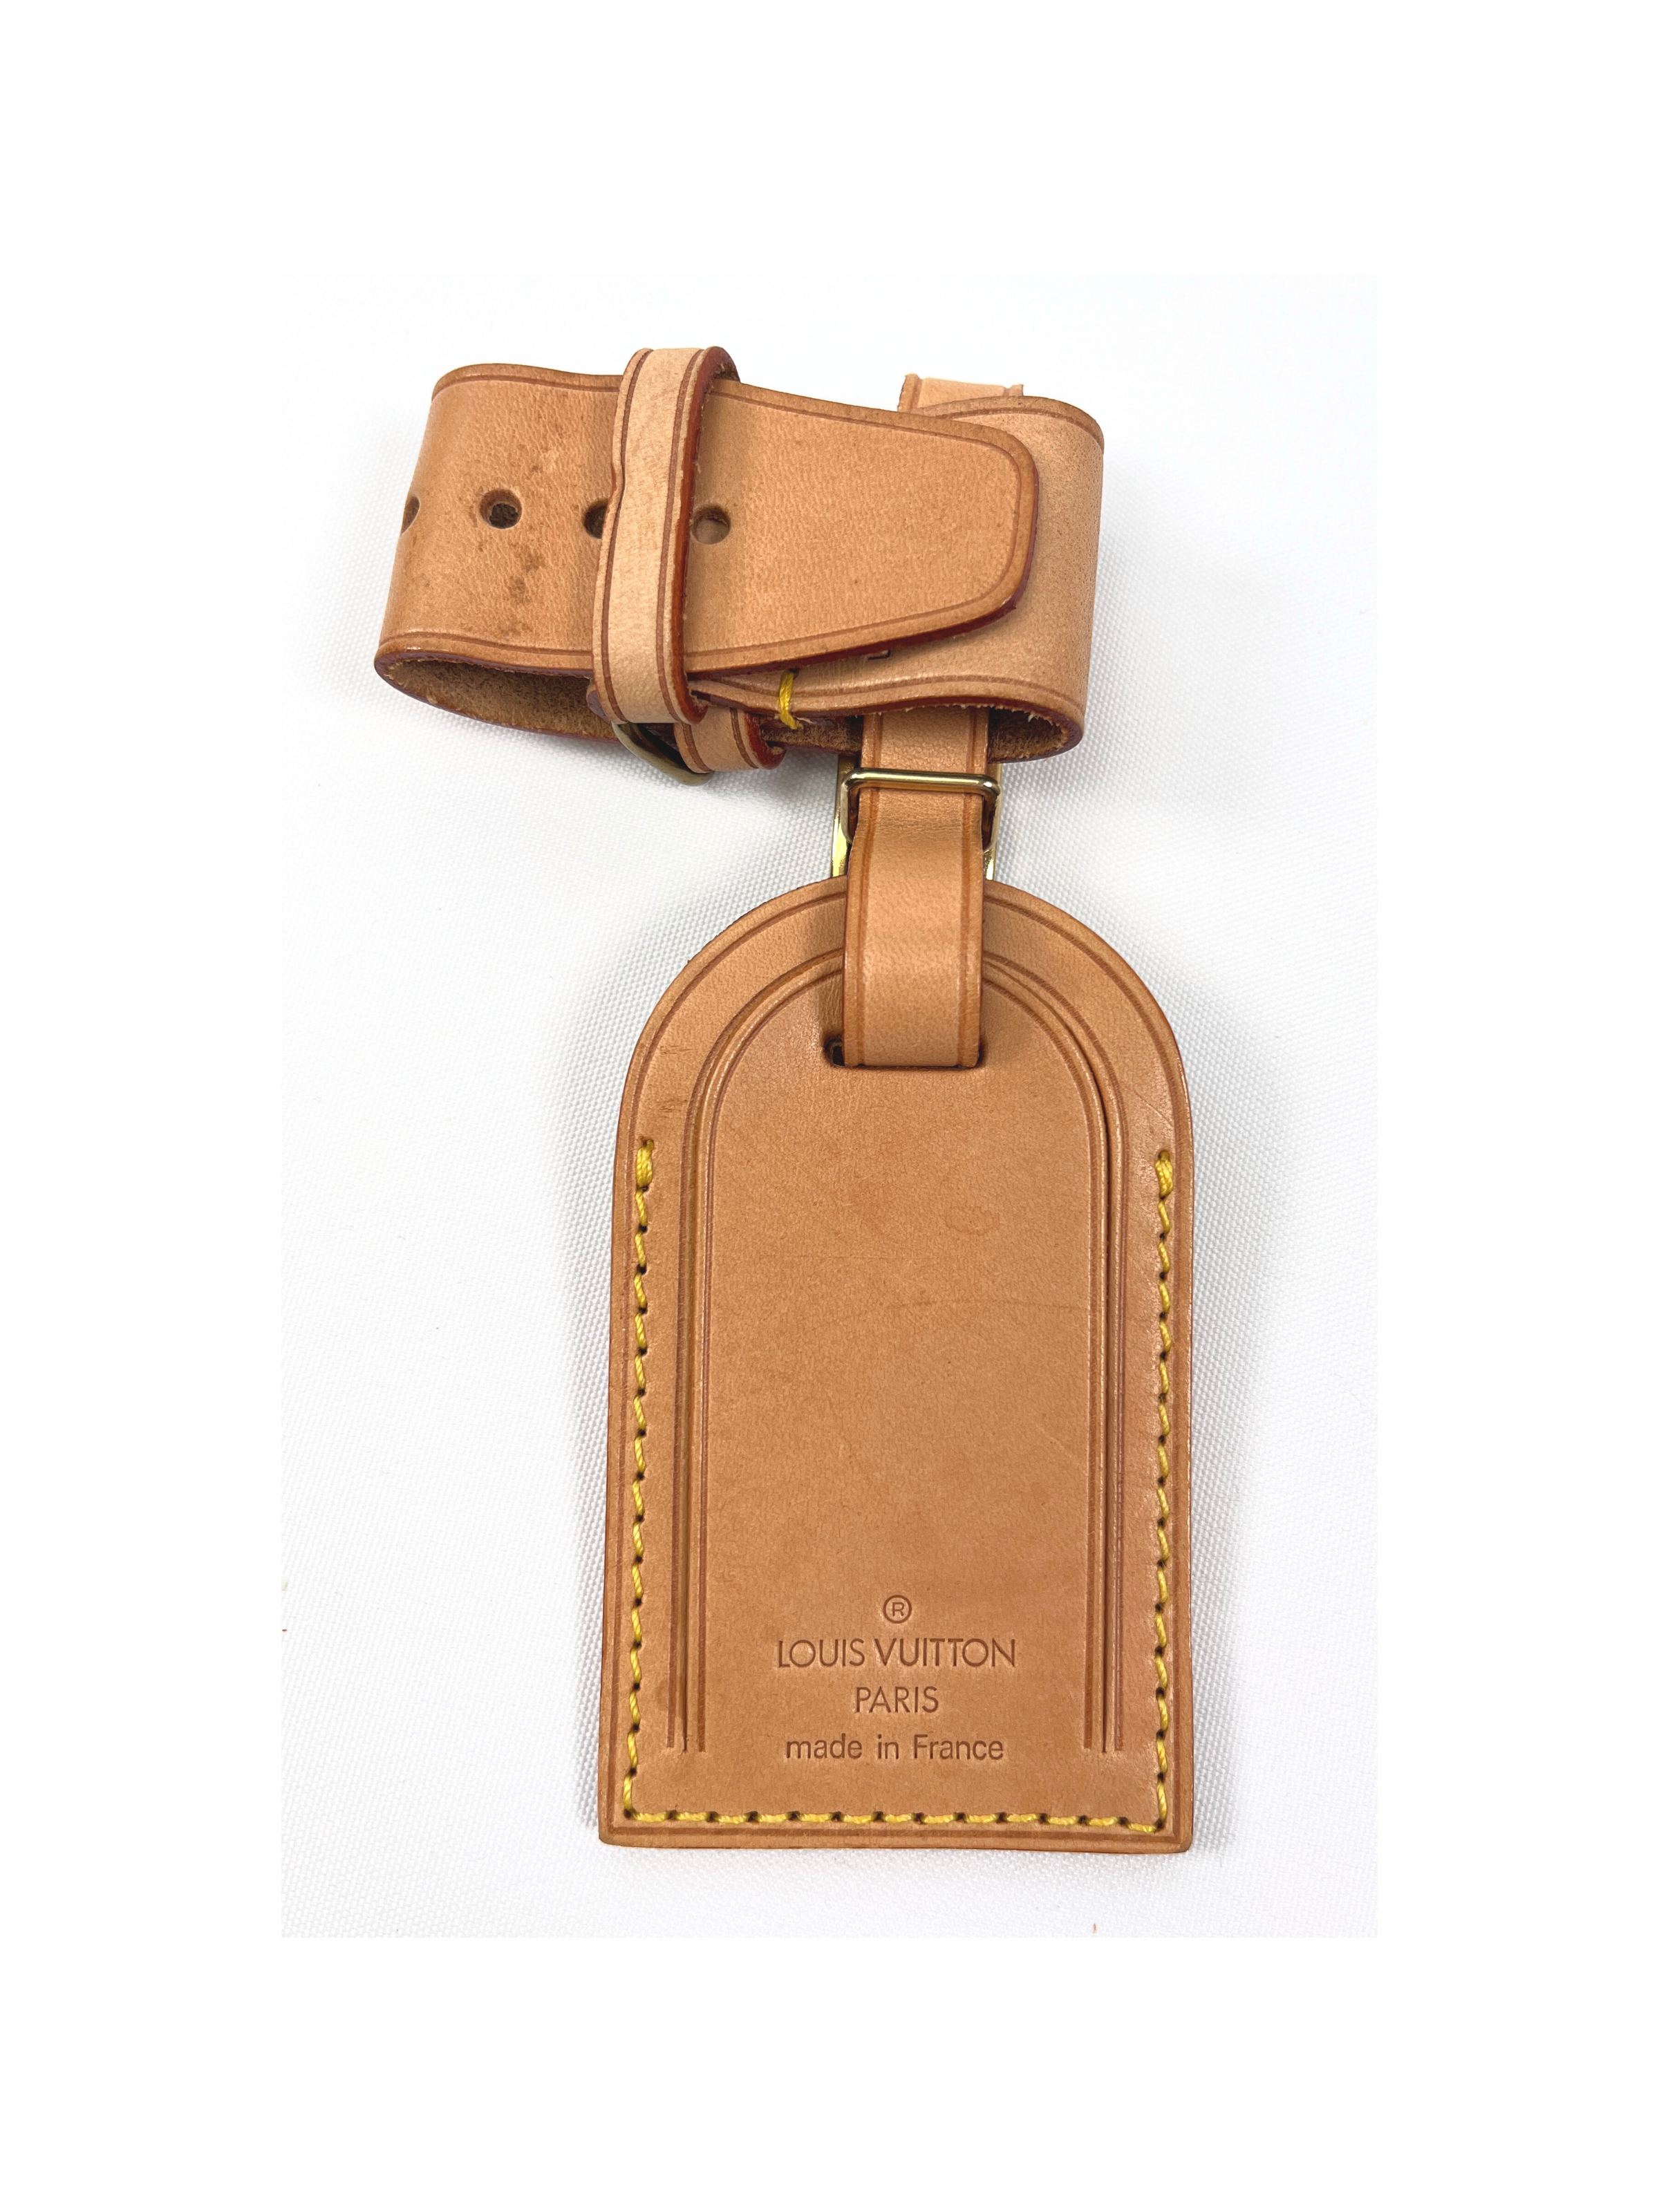 Louis Vuitton Vachetta Leather Luggage Tag and Poignet 154lvs25